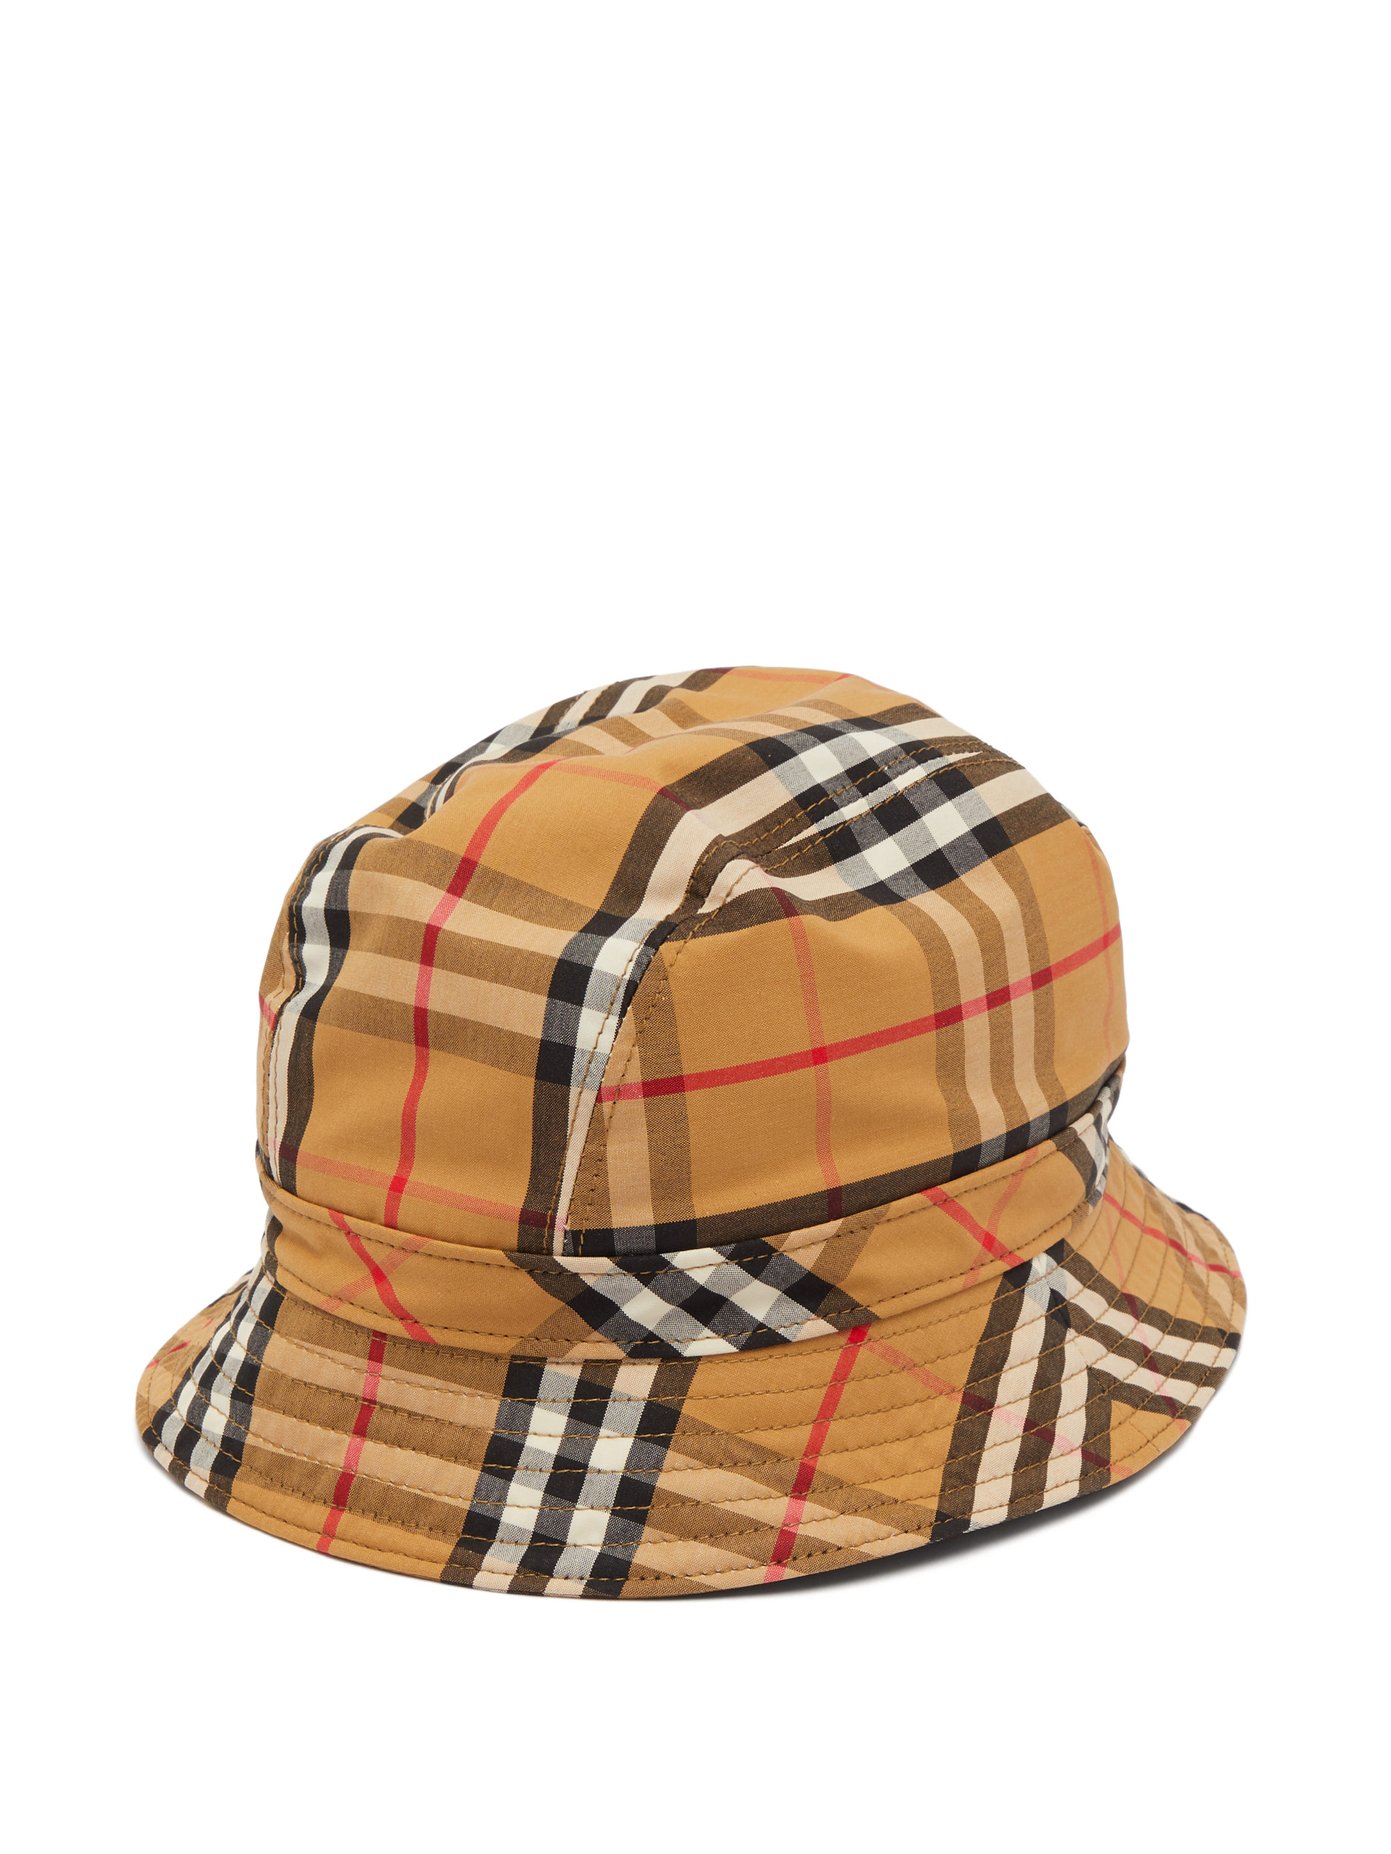 burberry vintage check hat